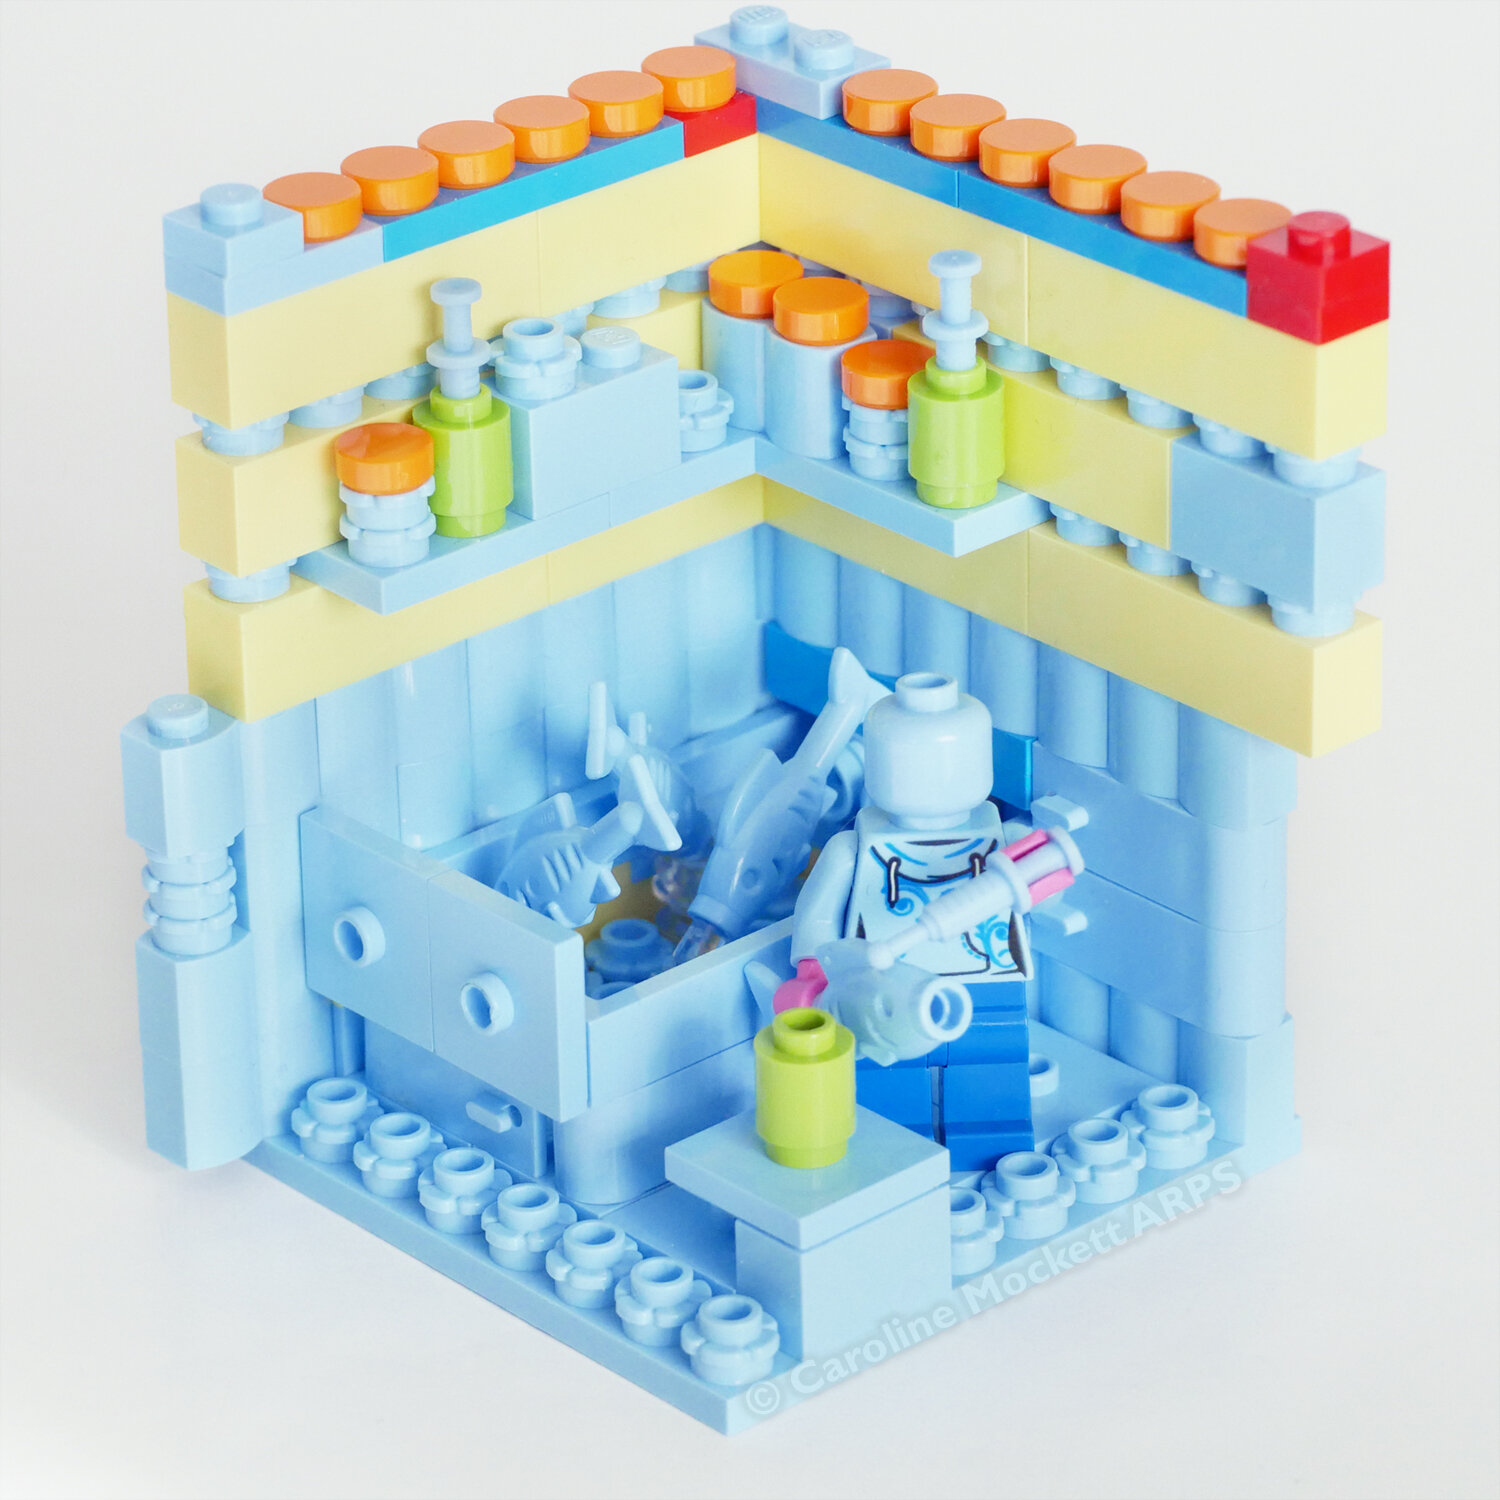 LEGO Bright Pink MONOFIG (Monochrome Minifigure)